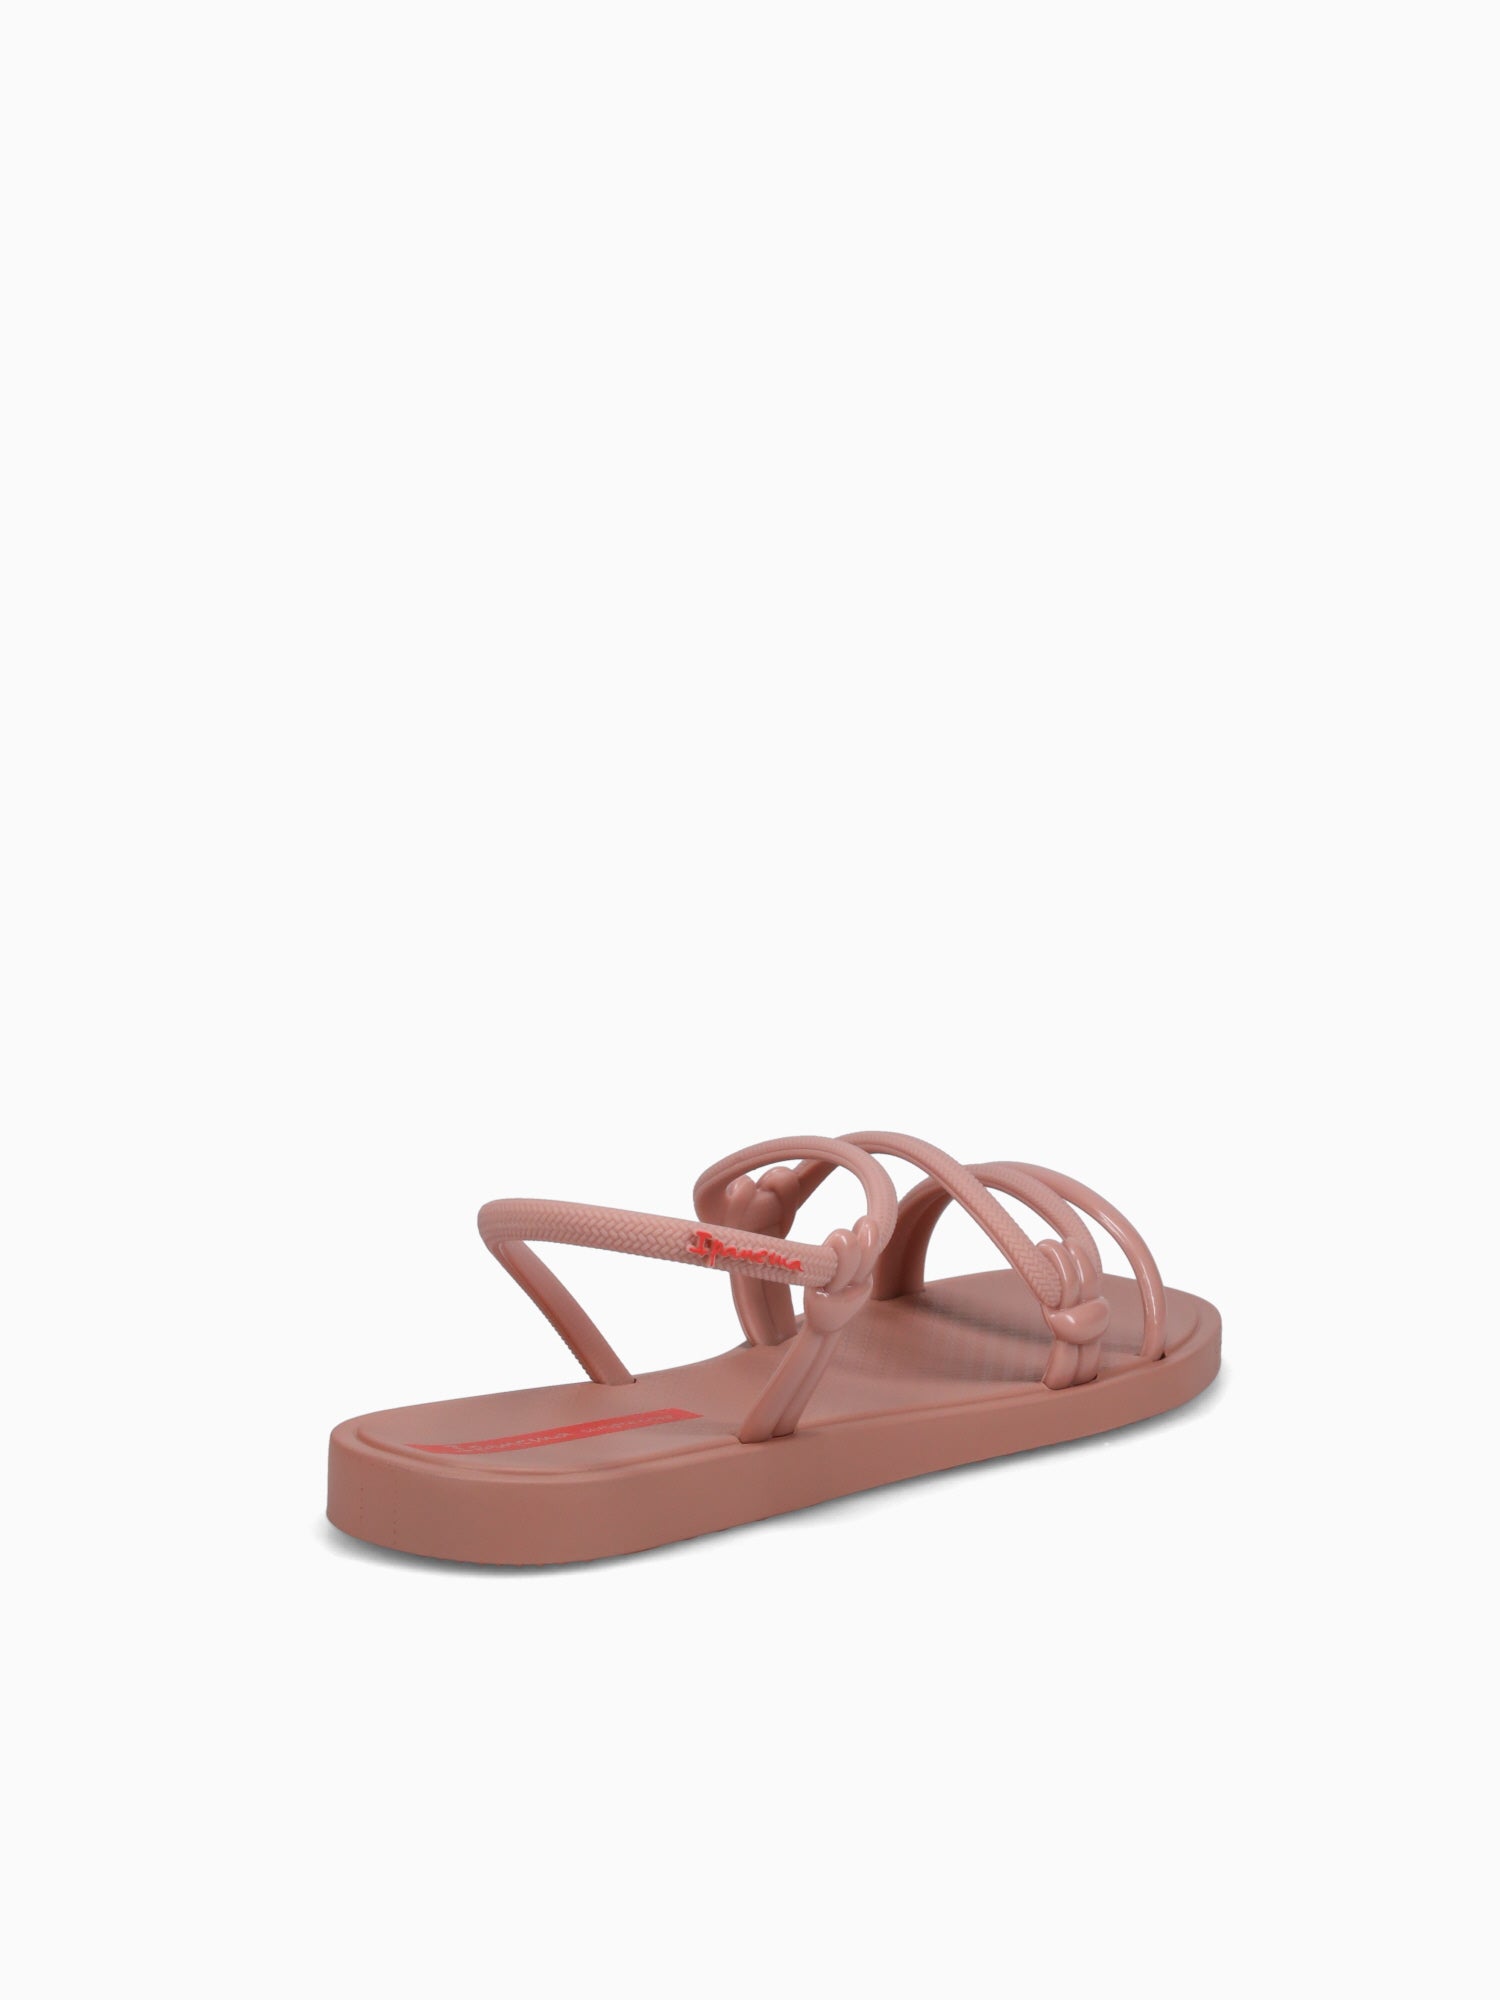 Ipanema Solar Sandal Pink  nude Pink / 5 / M